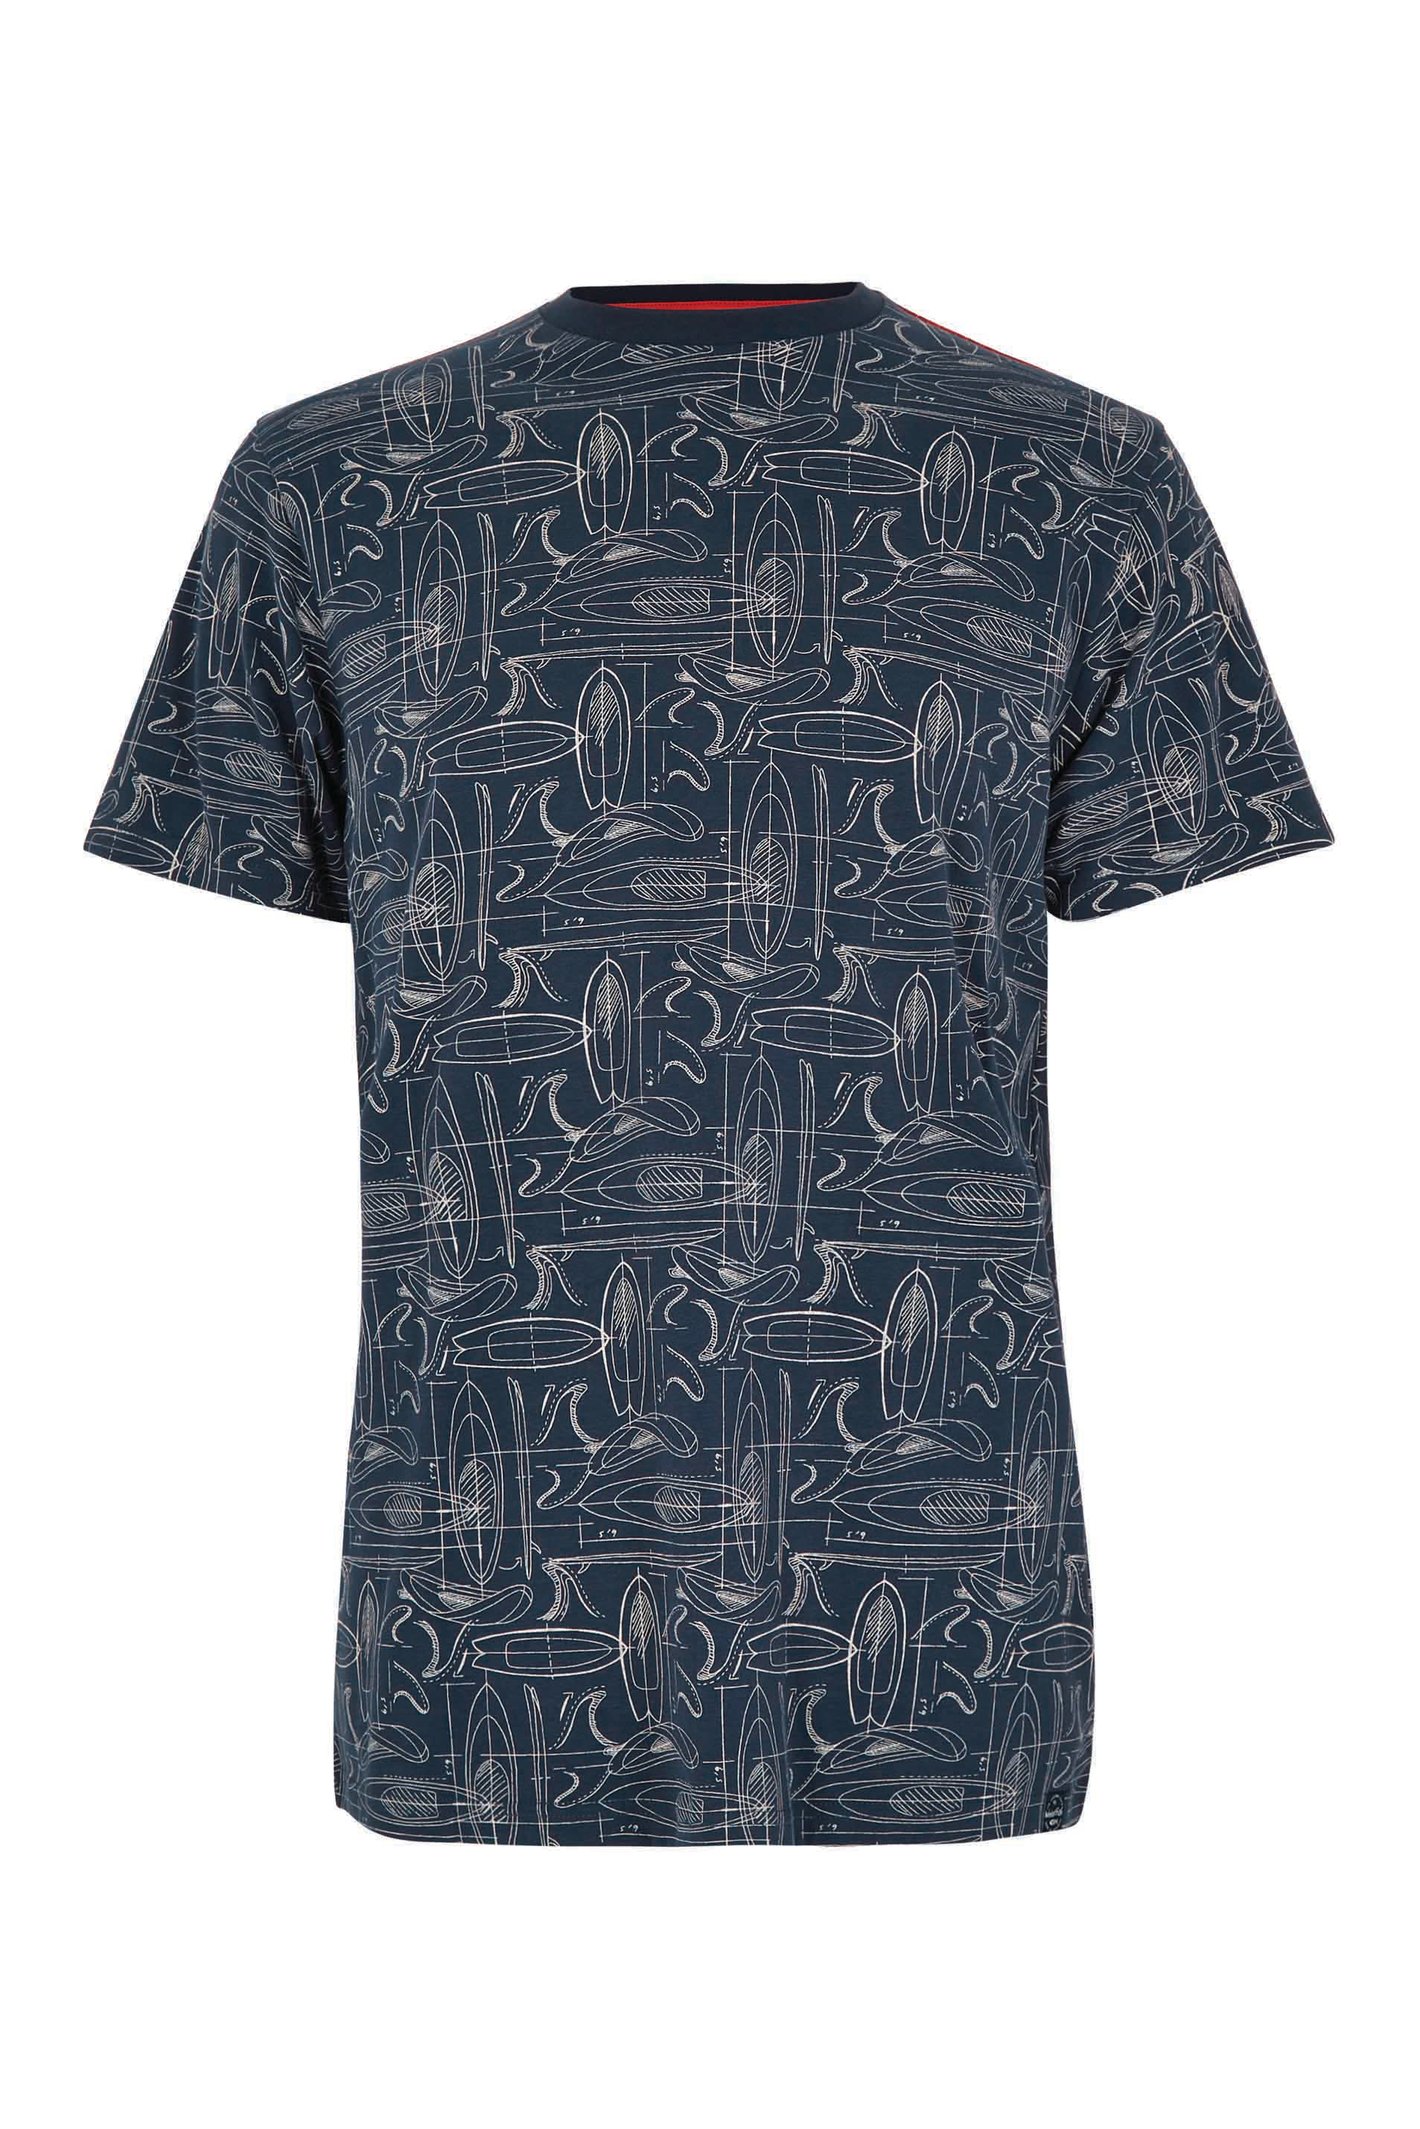 Weird Fish Howes Organic Cotton Printed T-Shirt Navy Size 4XL